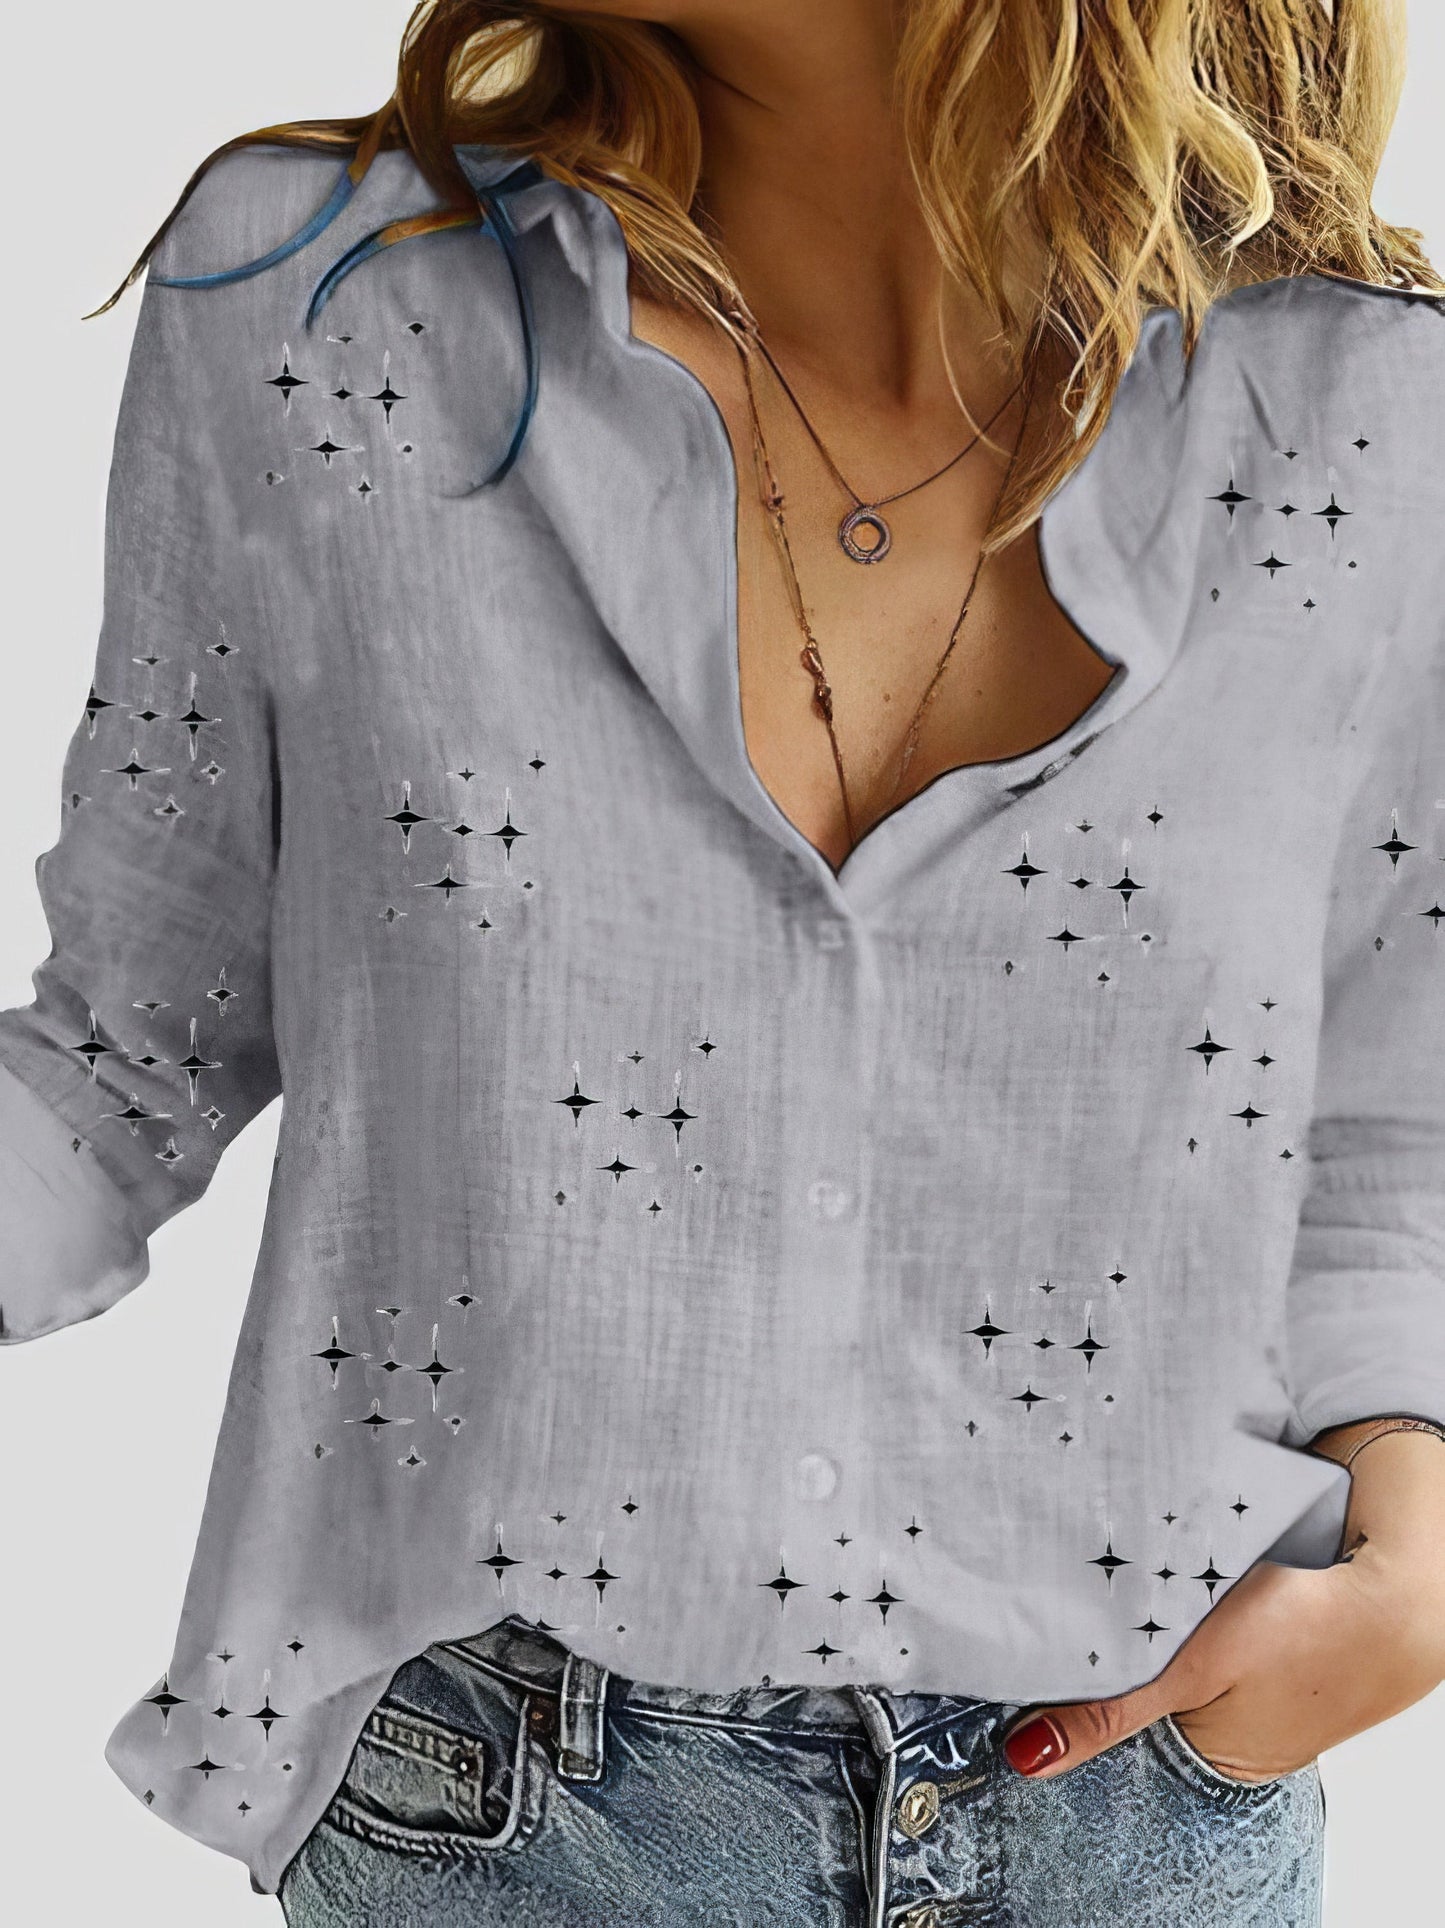 Blouses - Star Print Button Long Sleeve Blouses - MsDressly